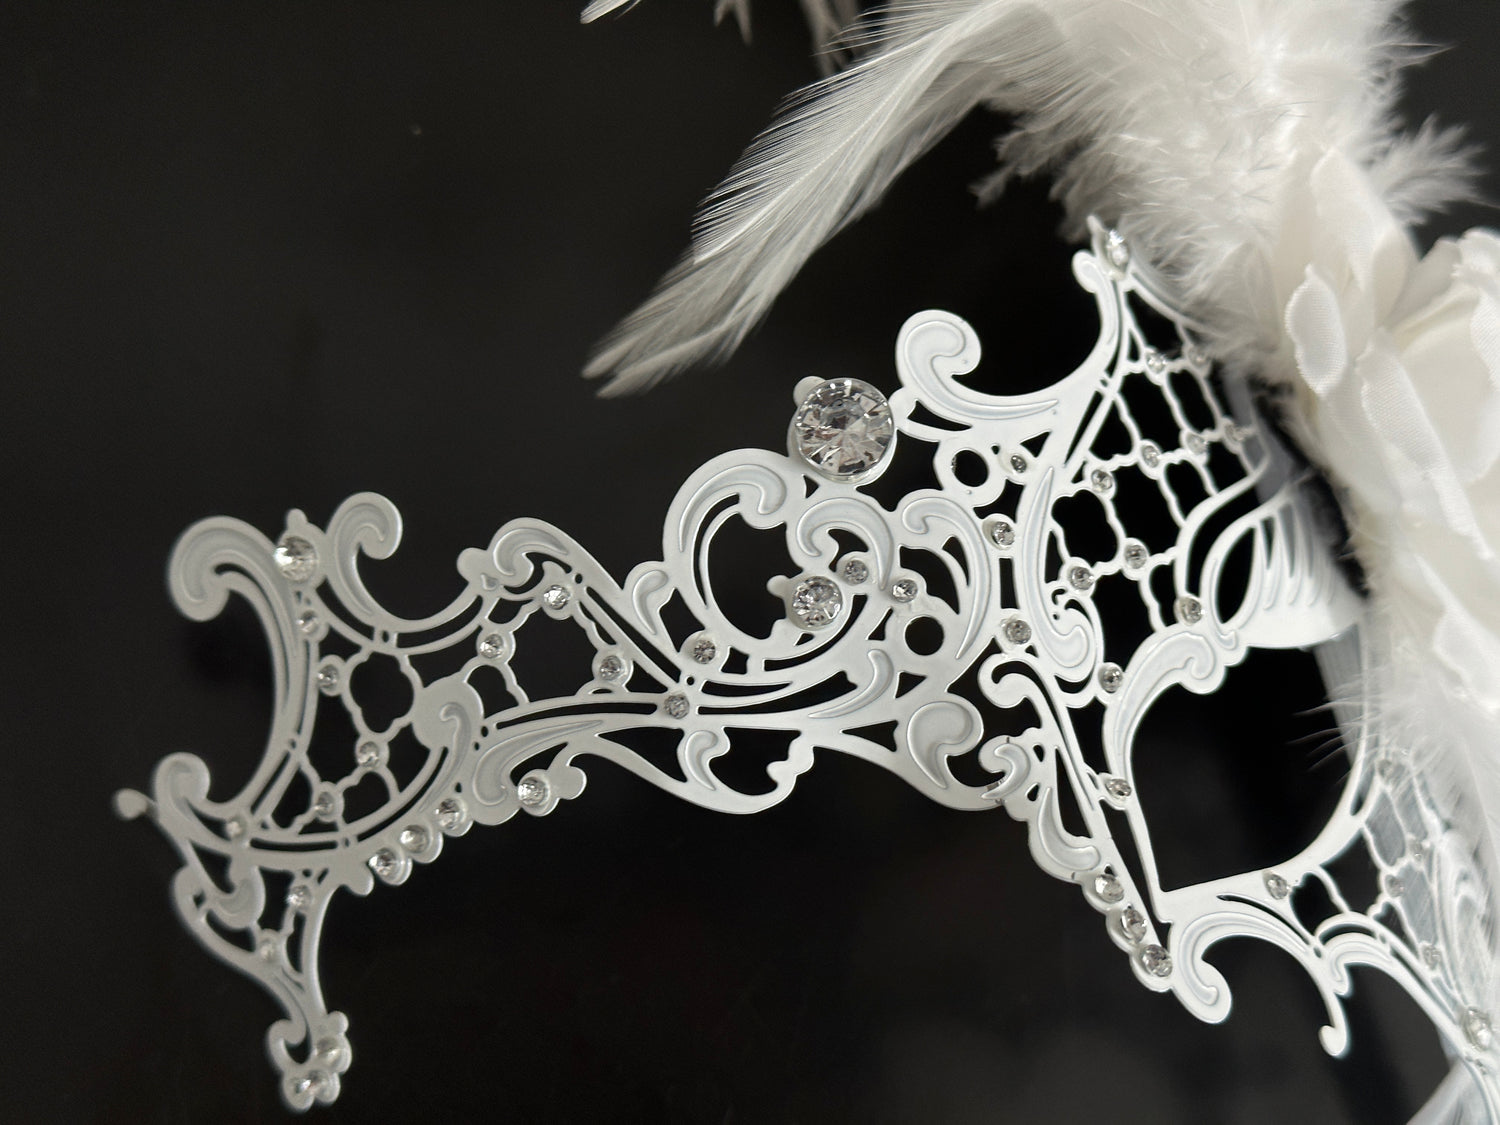 Metal Rhinestone Feather Mask - White